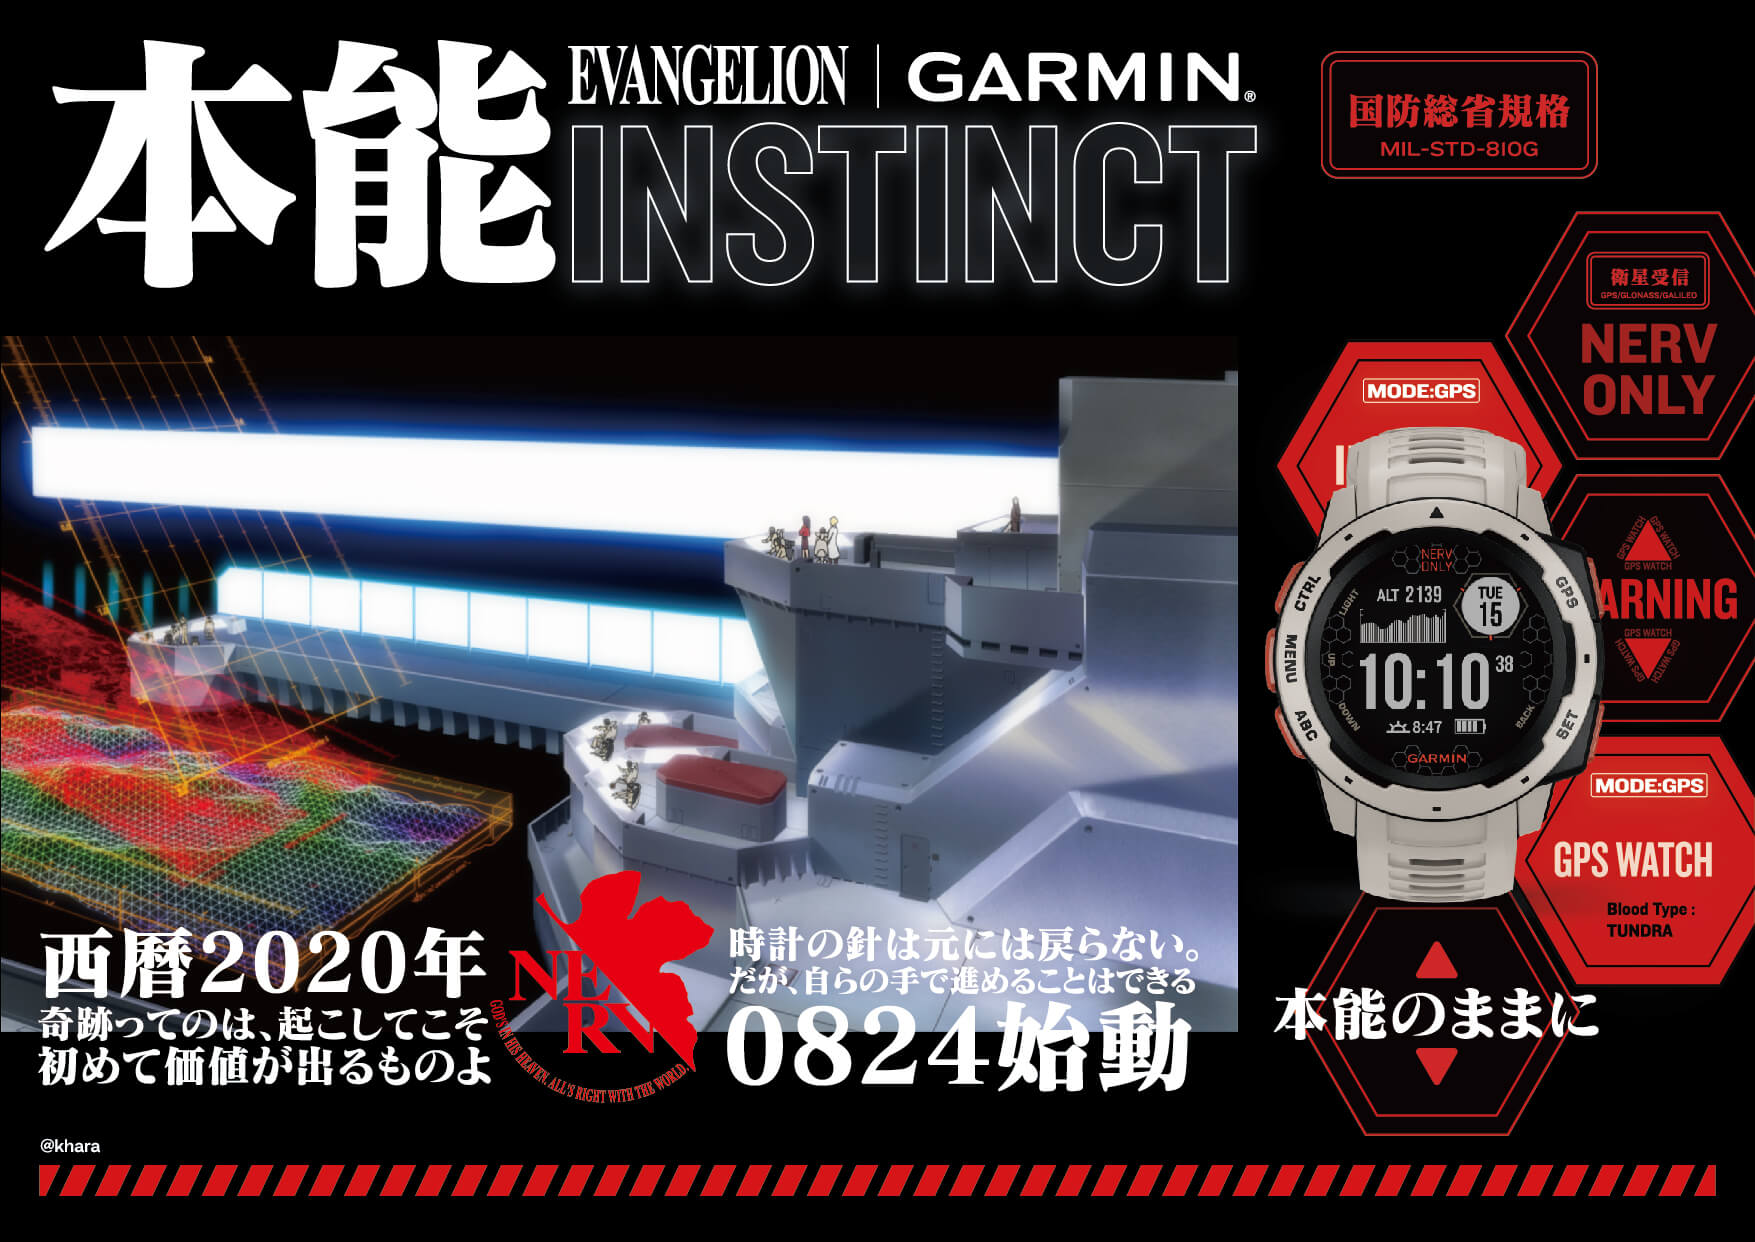 Instinct Evangelion | アウトドア | 製品 | Garmin | Japan | Home